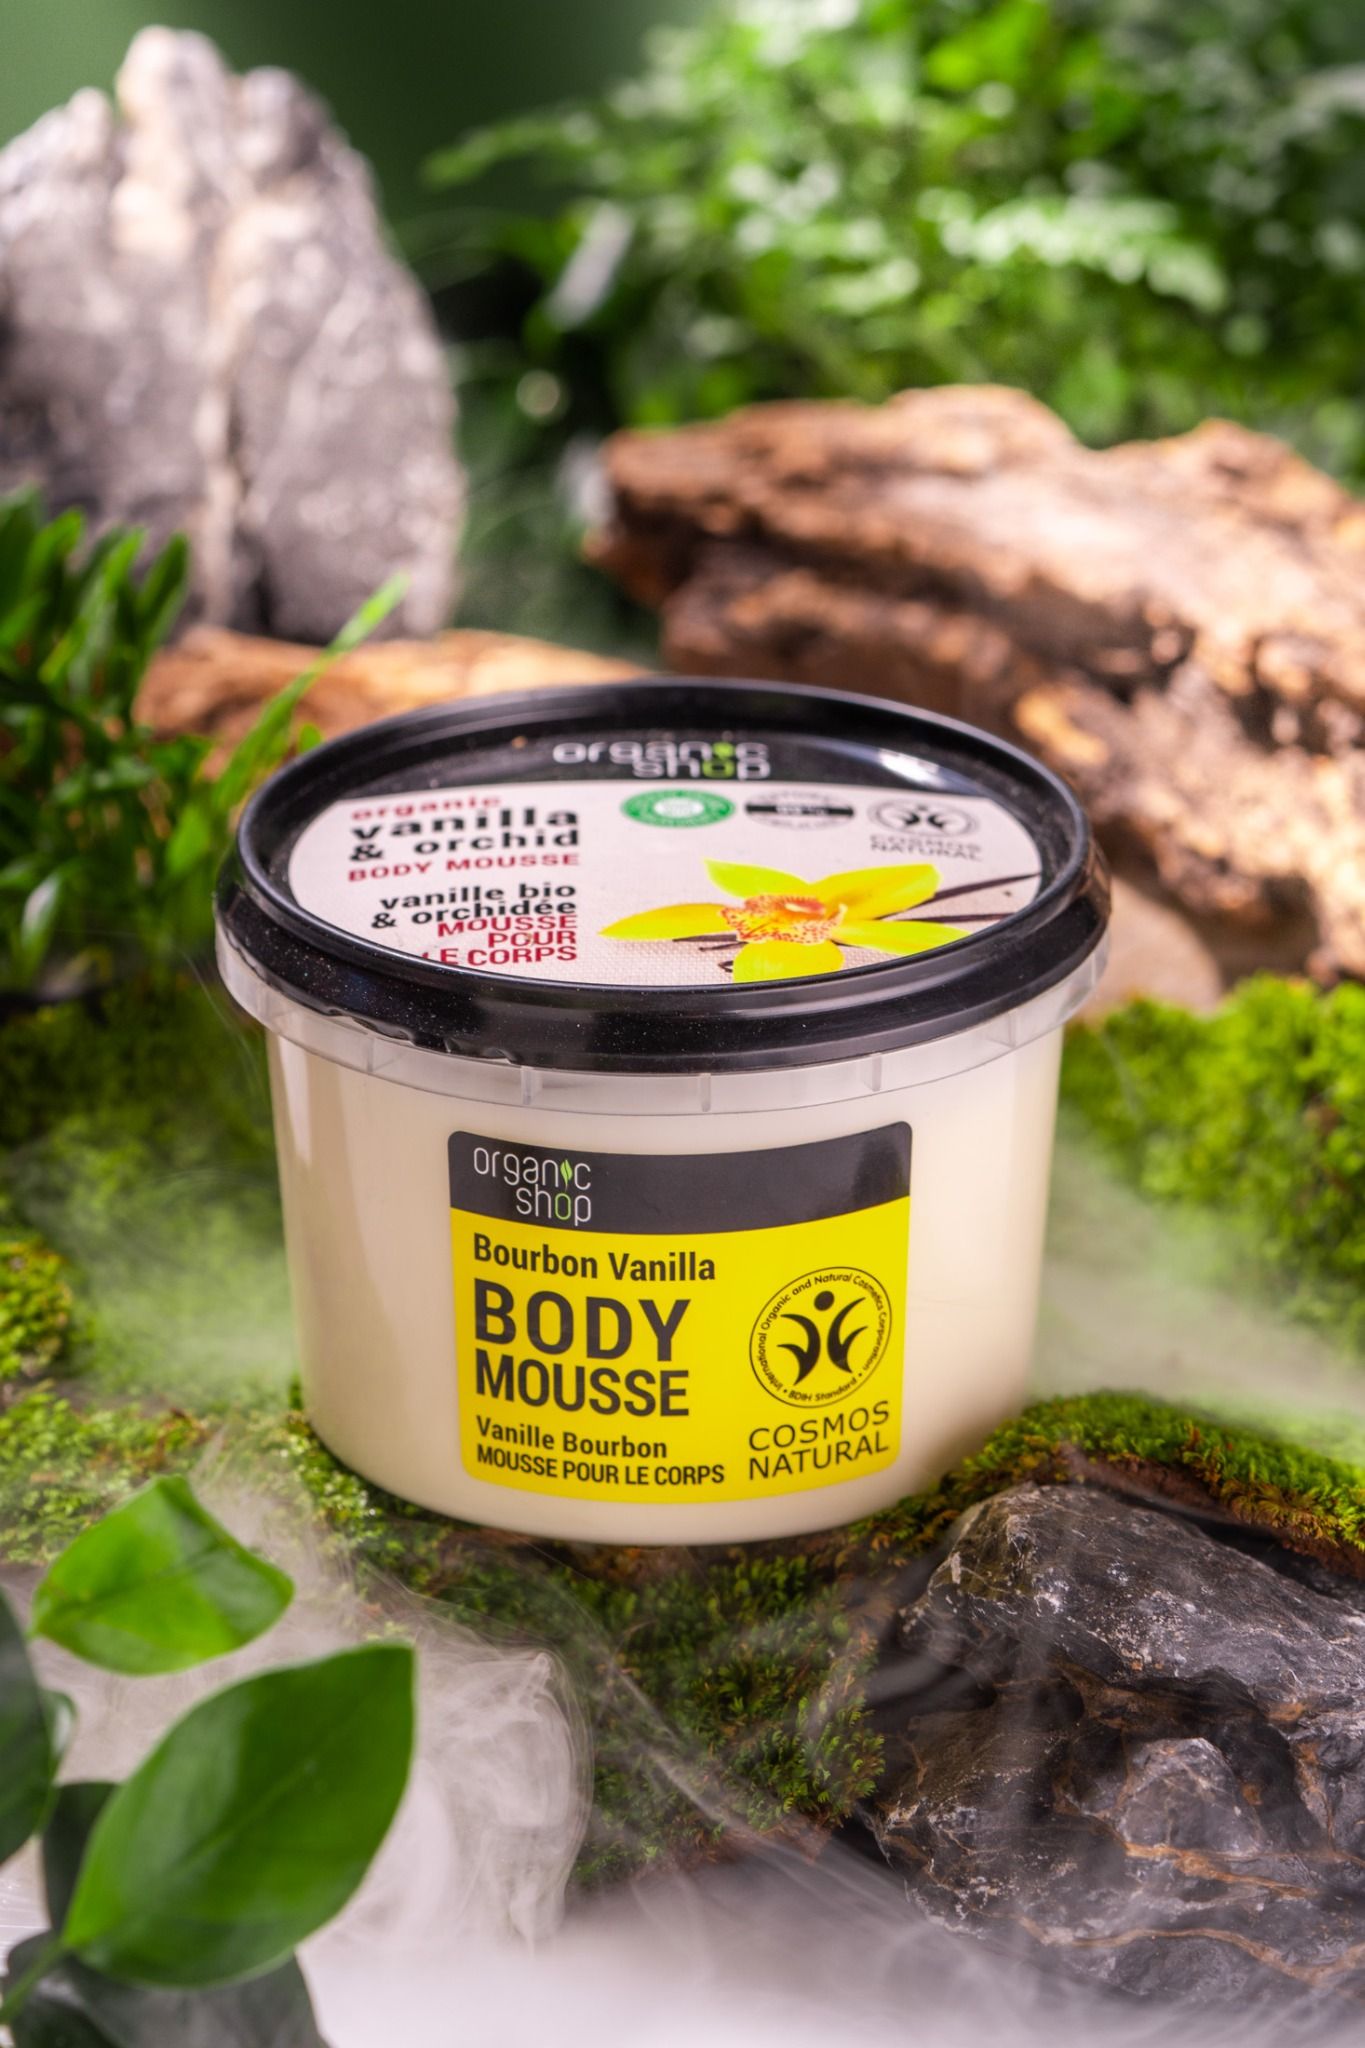  Organic Shop Body Mousse Bourbon Vanilla 